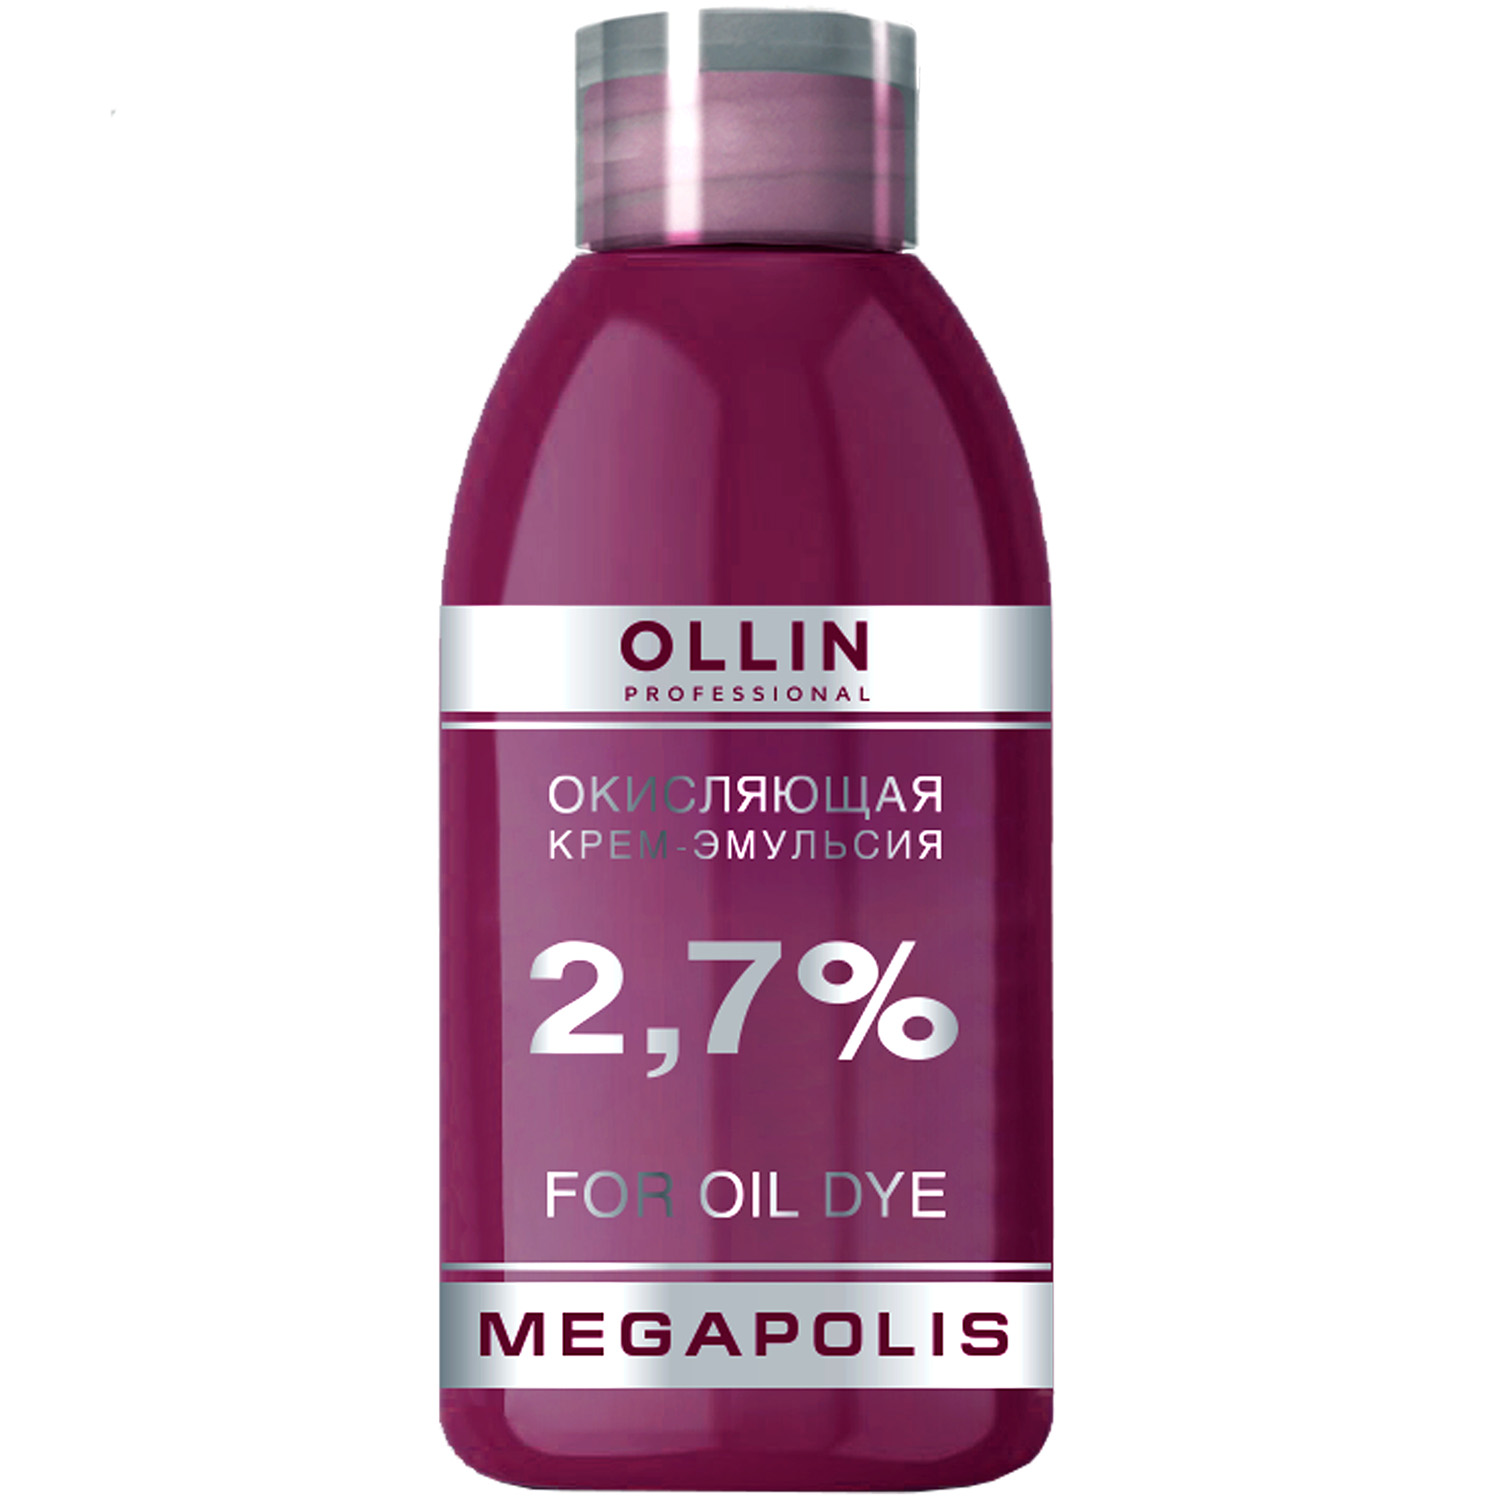 Ollin Professional Окисляющая крем-эмульсия 2,7%, 75 мл (Ollin Professional, Megapolis) крем эмульсия окисляющая ollin professional megapolis 2 7% 75 мл